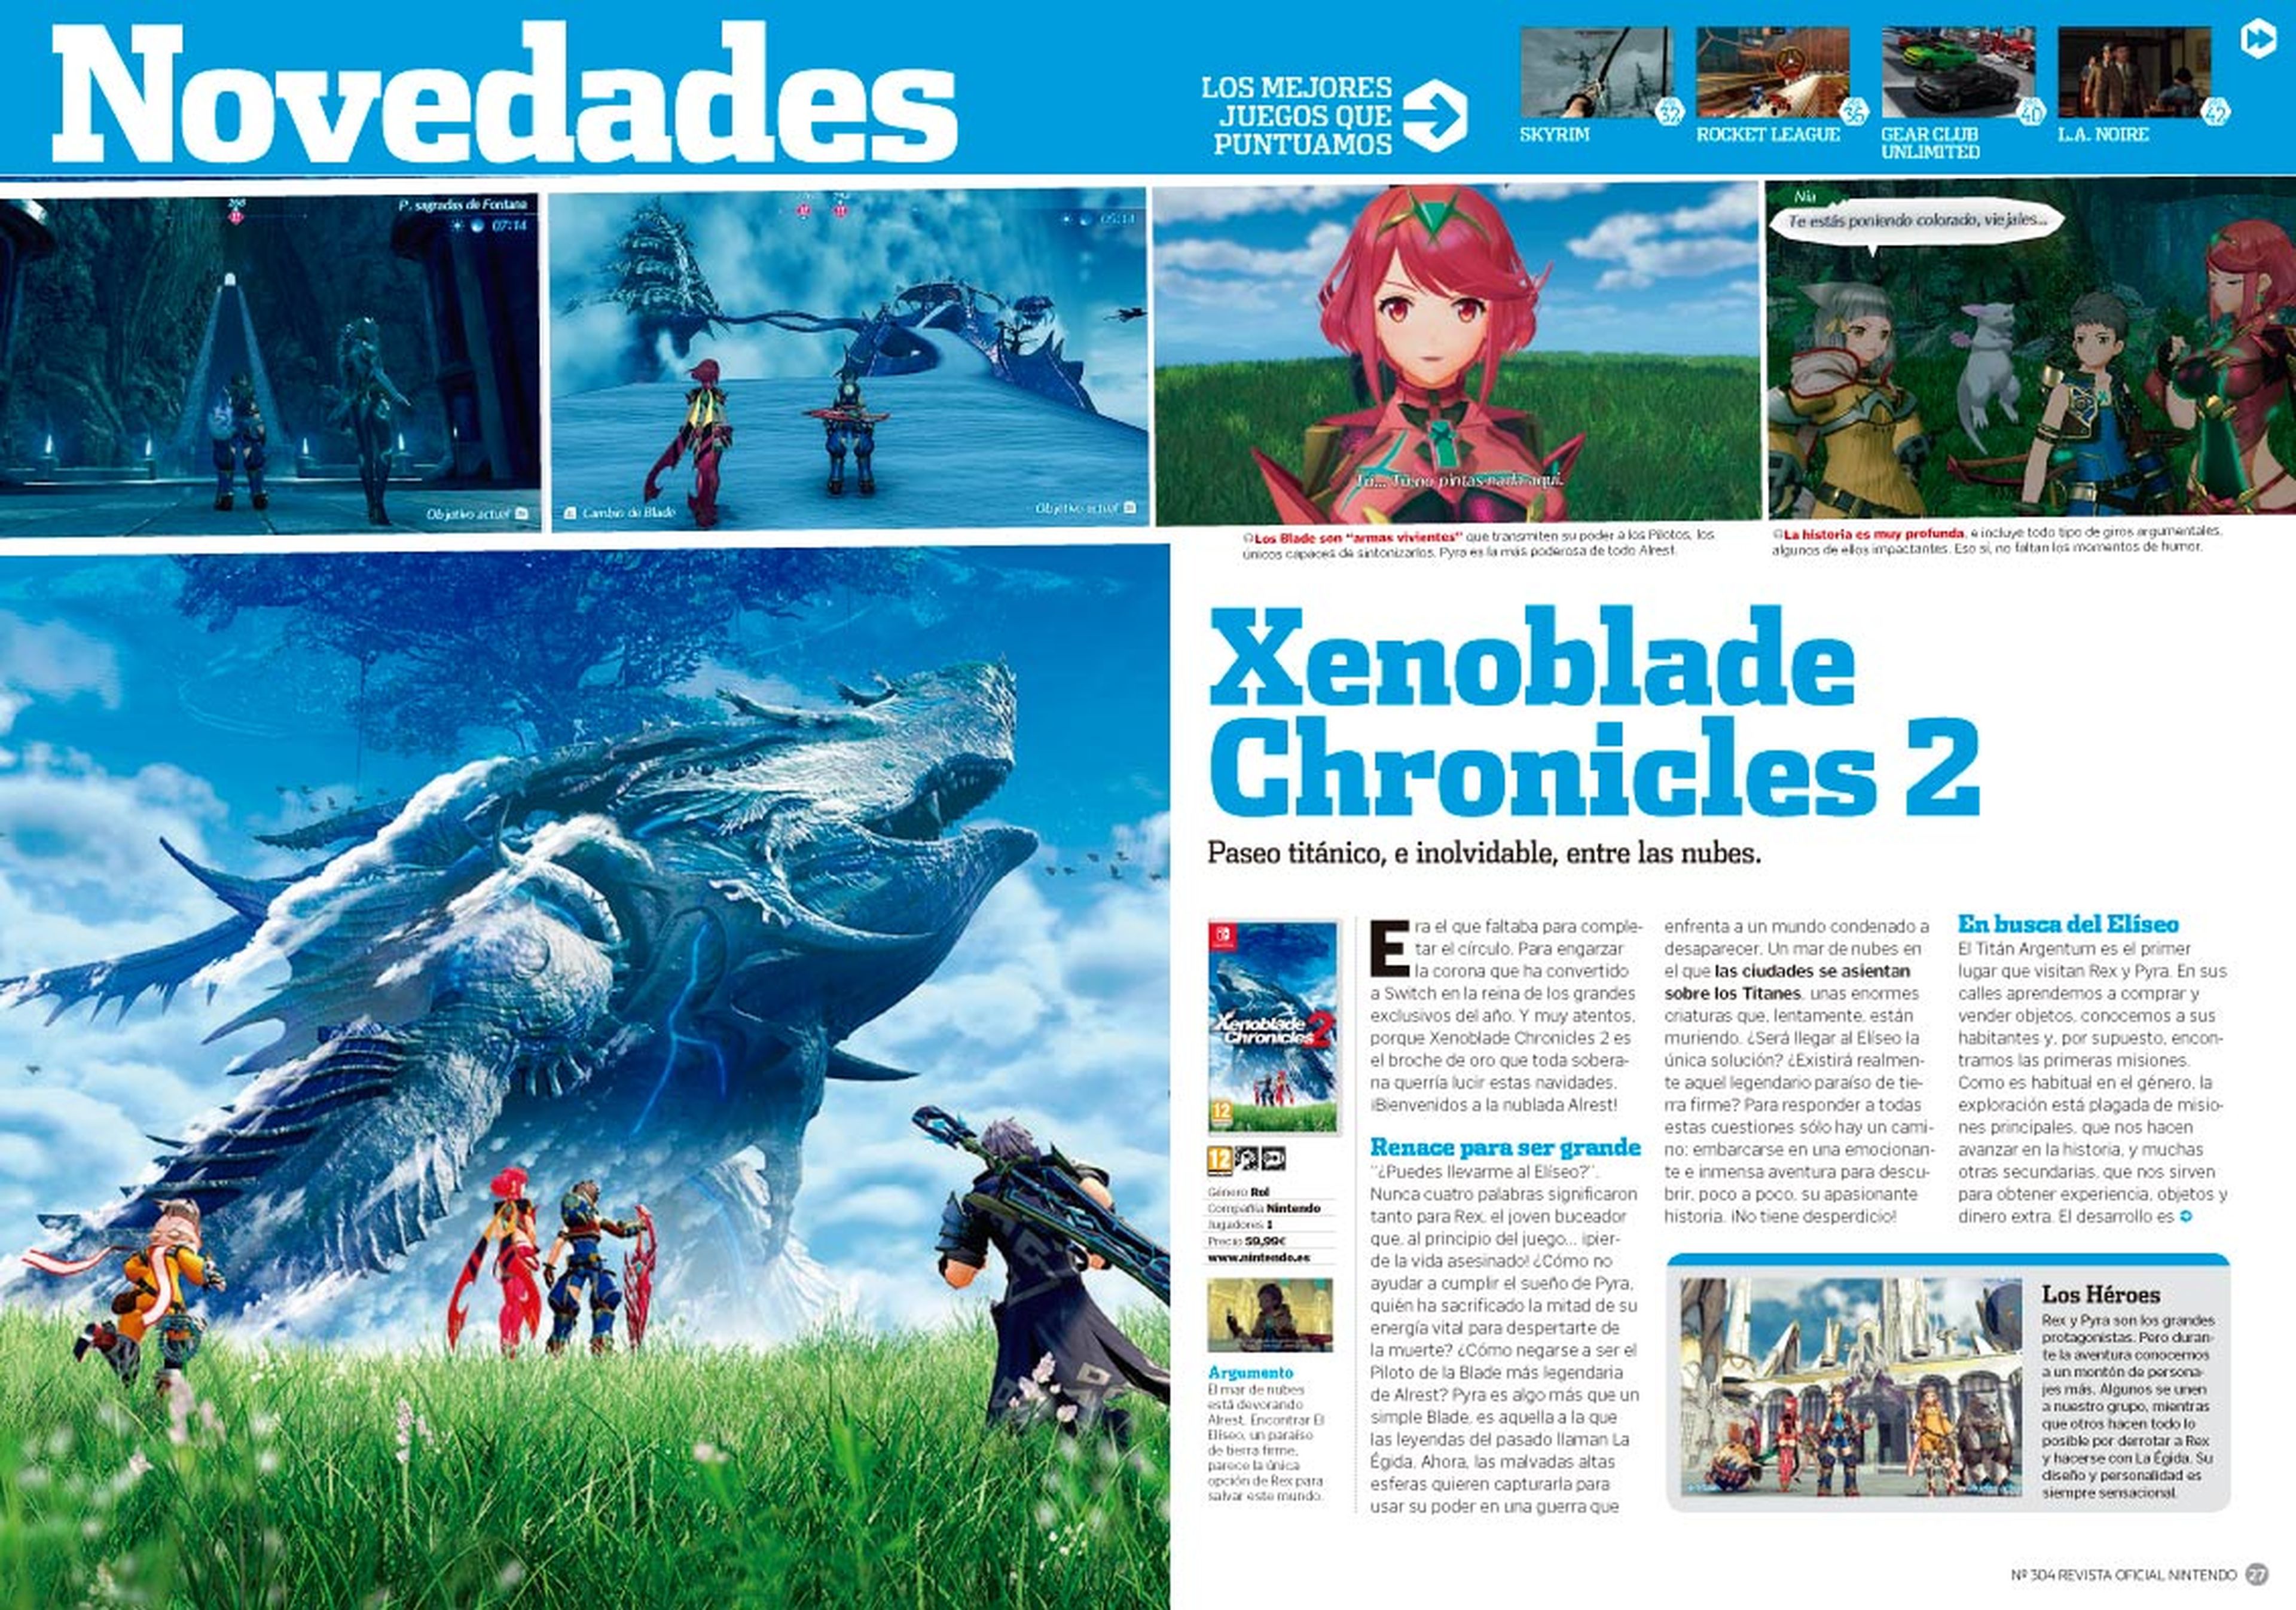 Xenoblade Chronicles 2 - RON 304